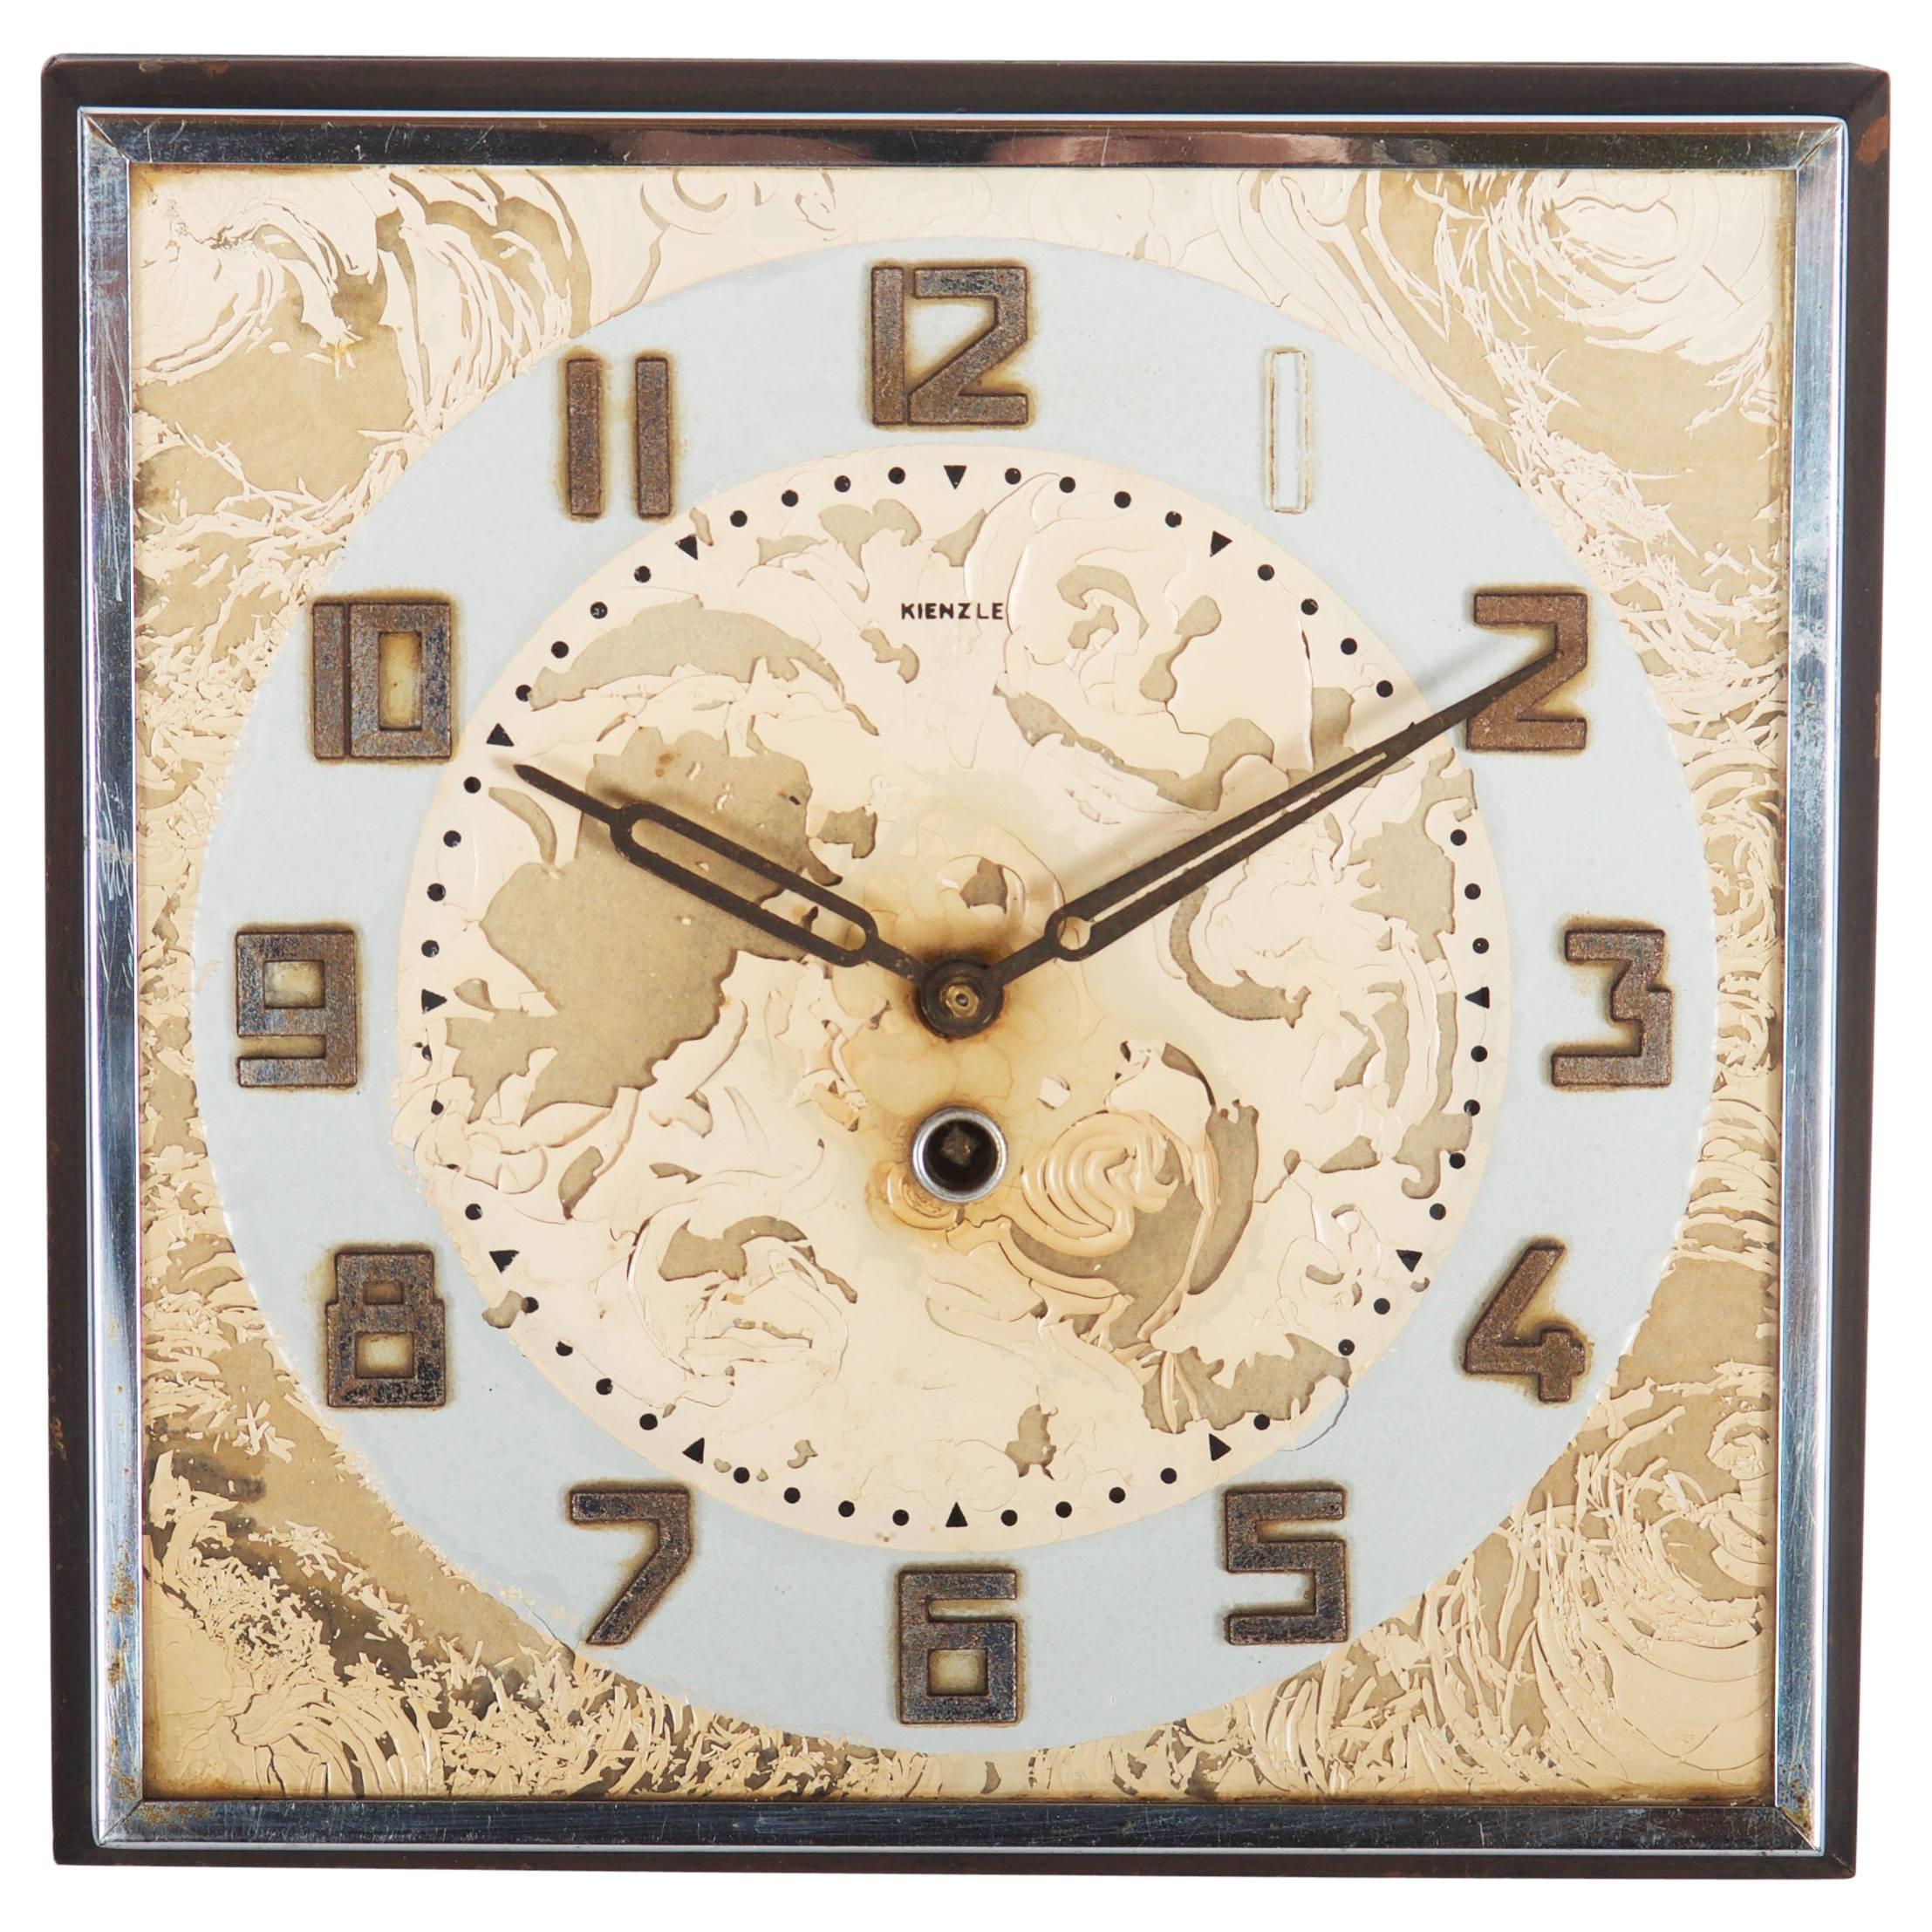 Kienzle Wall Clock from the 1920s